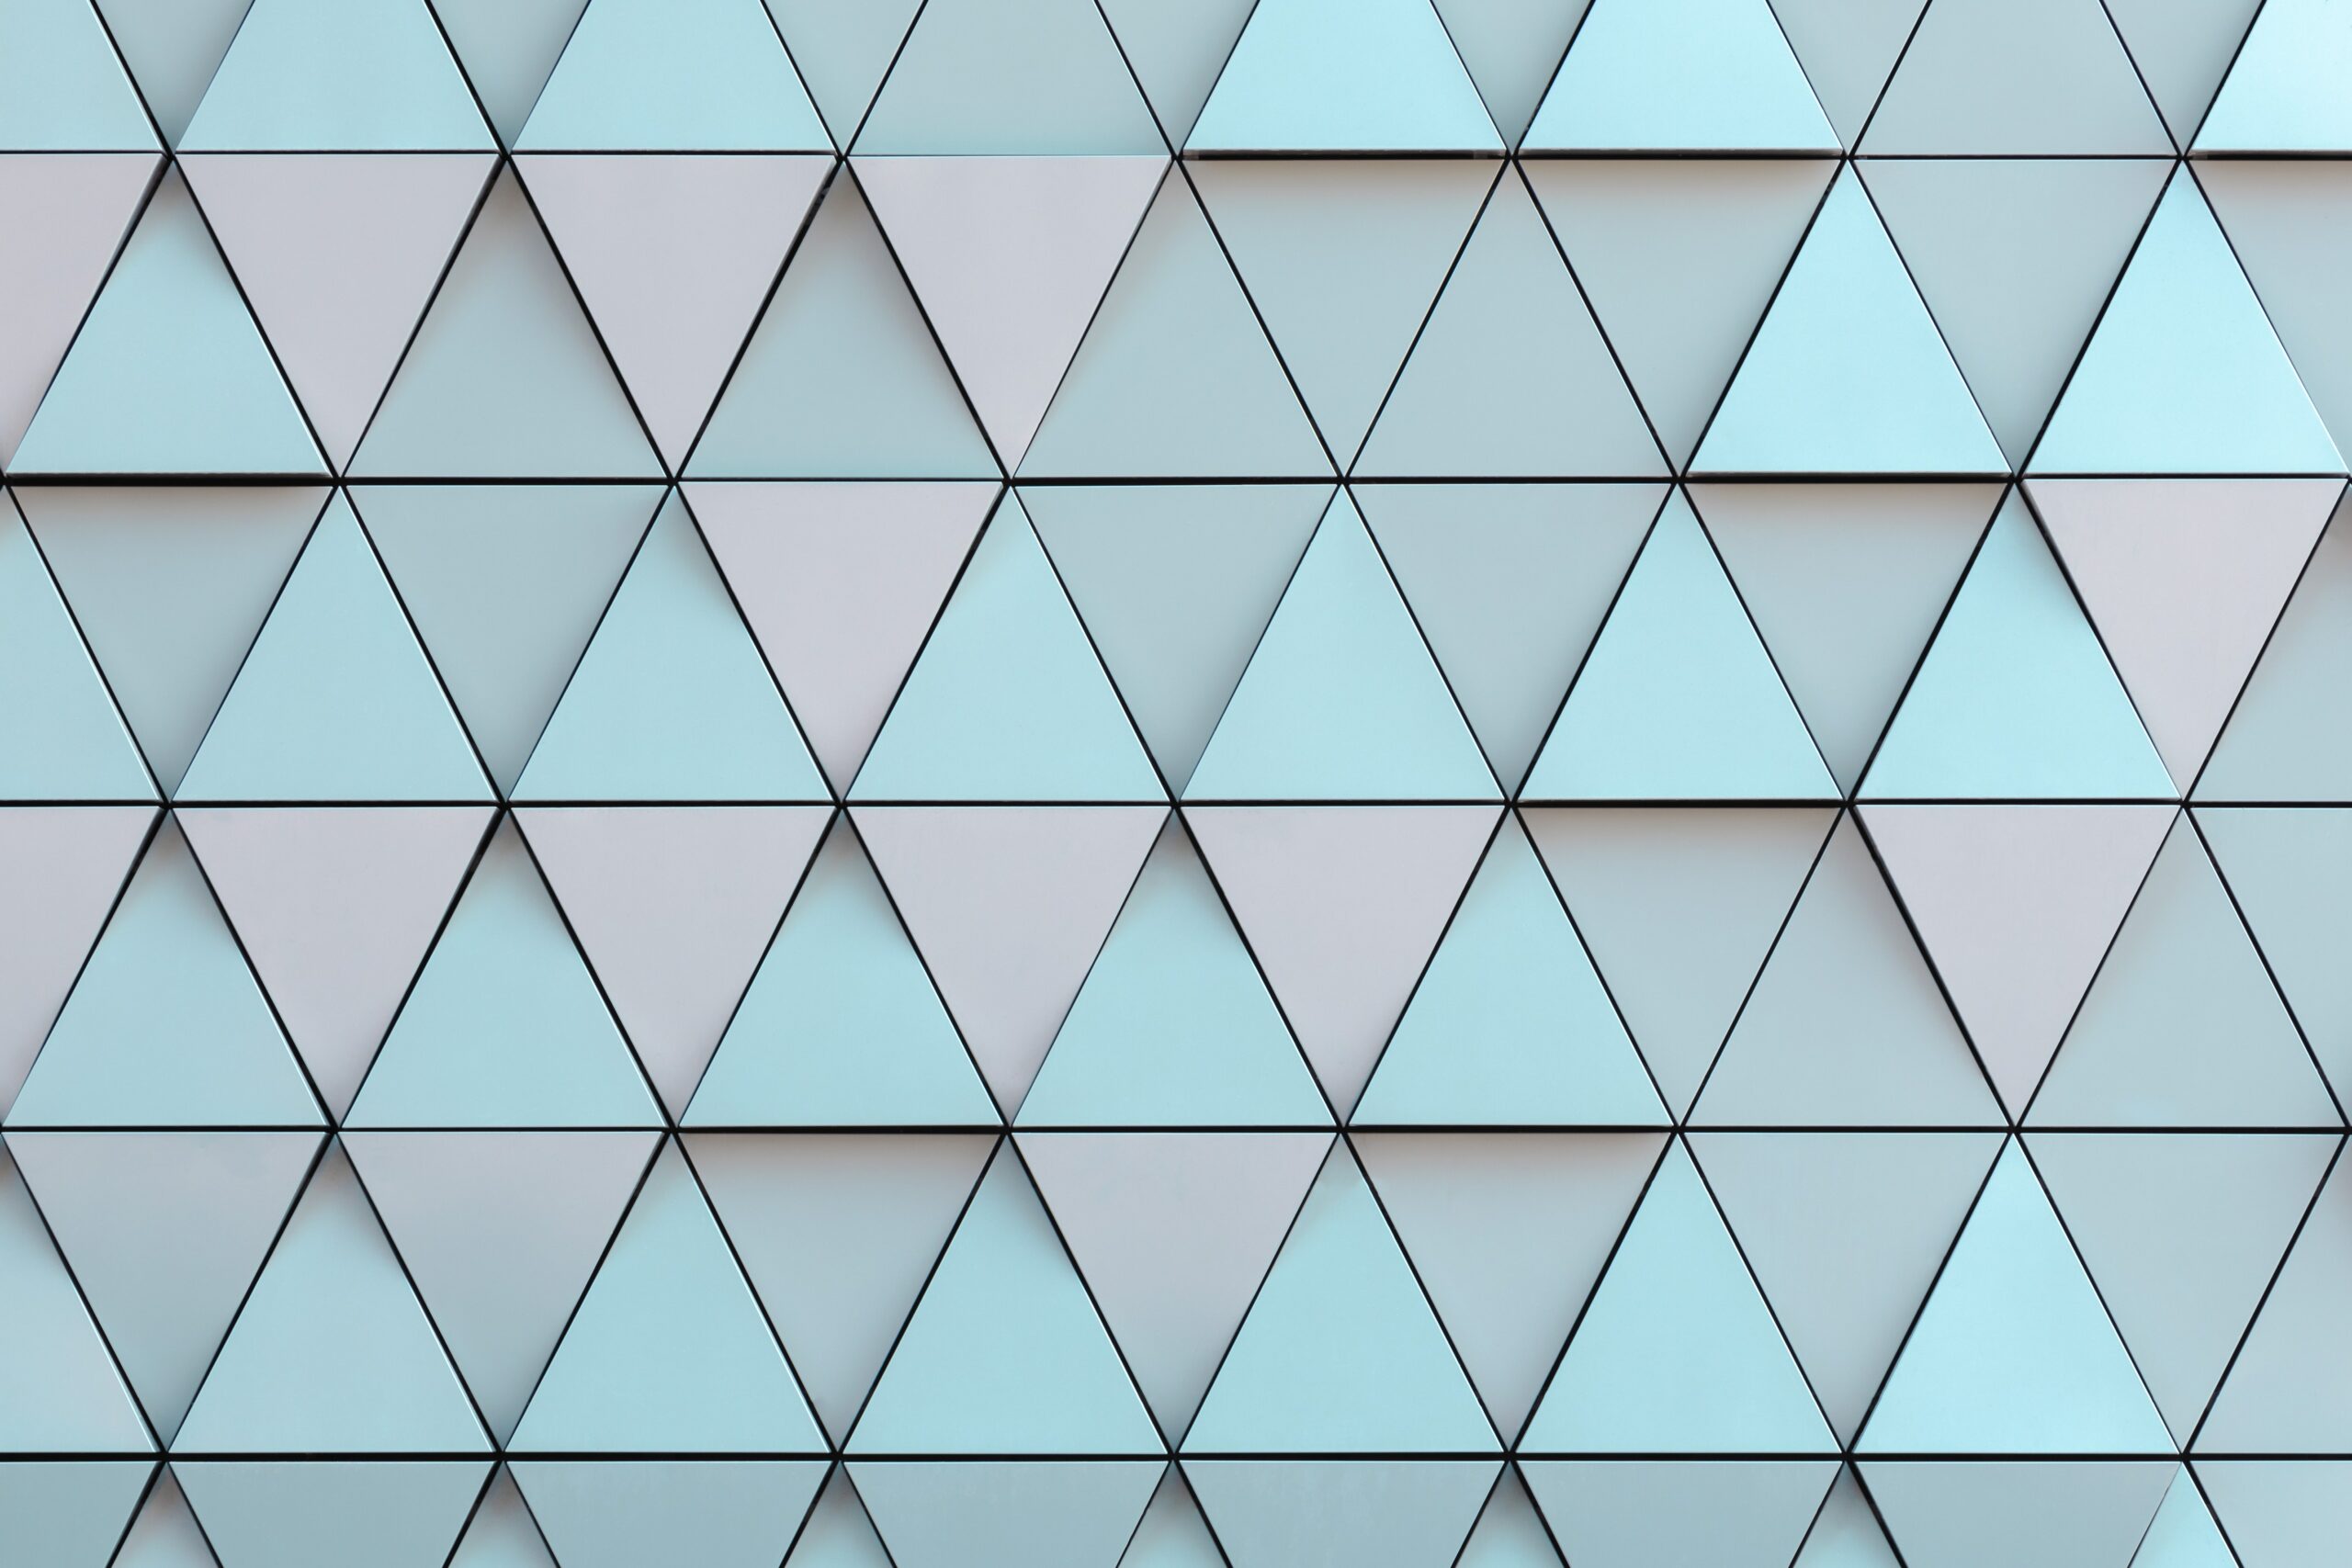 Textured background of alternating darker blue and lighter blue triangles.